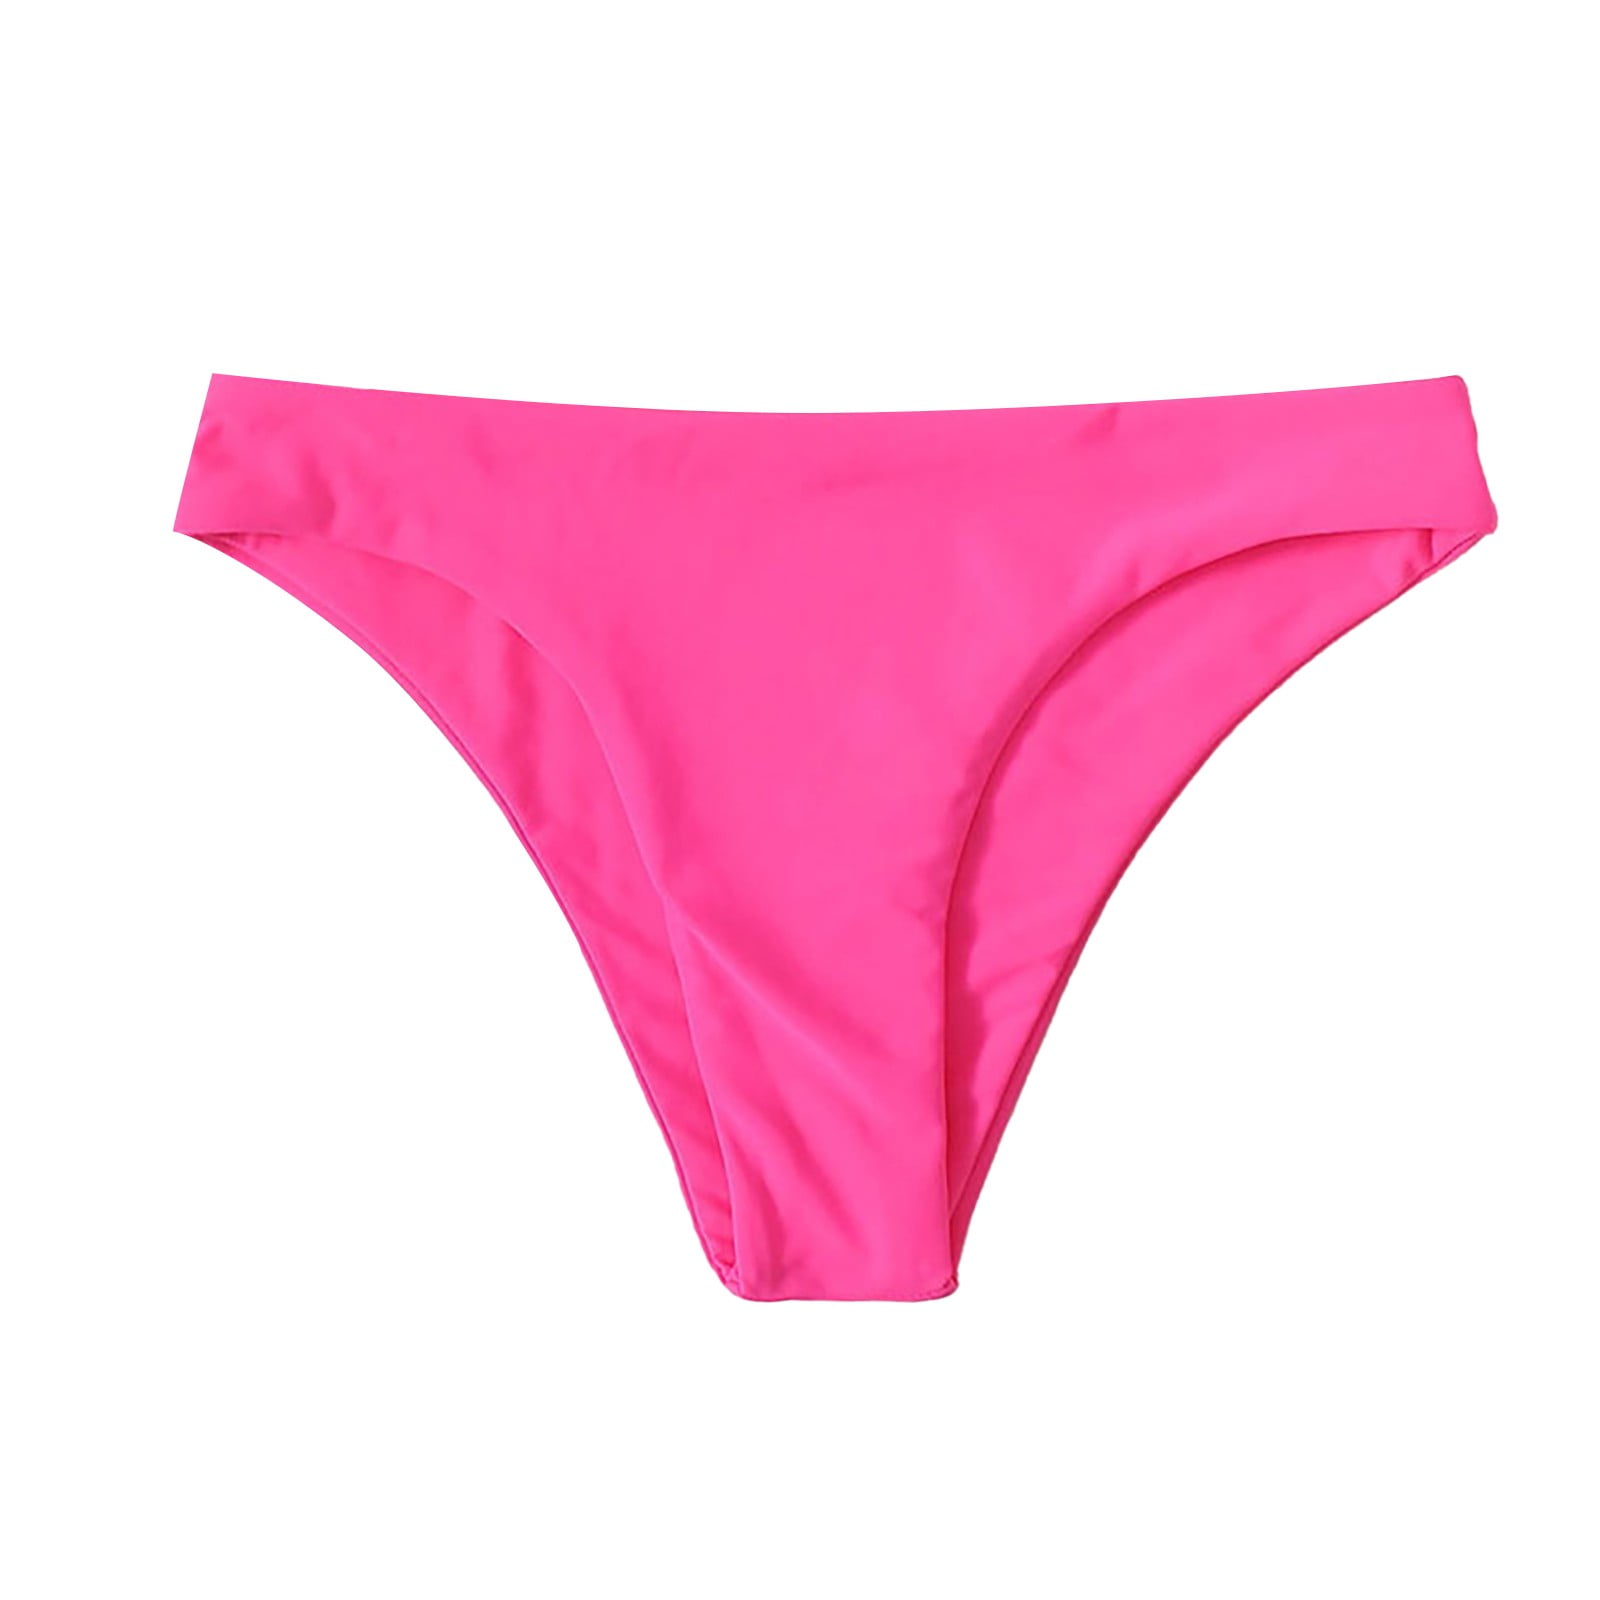 Swim Shorts Women Bottom Swimsuit Mid Rise High Cut Hot Pink Banded ...